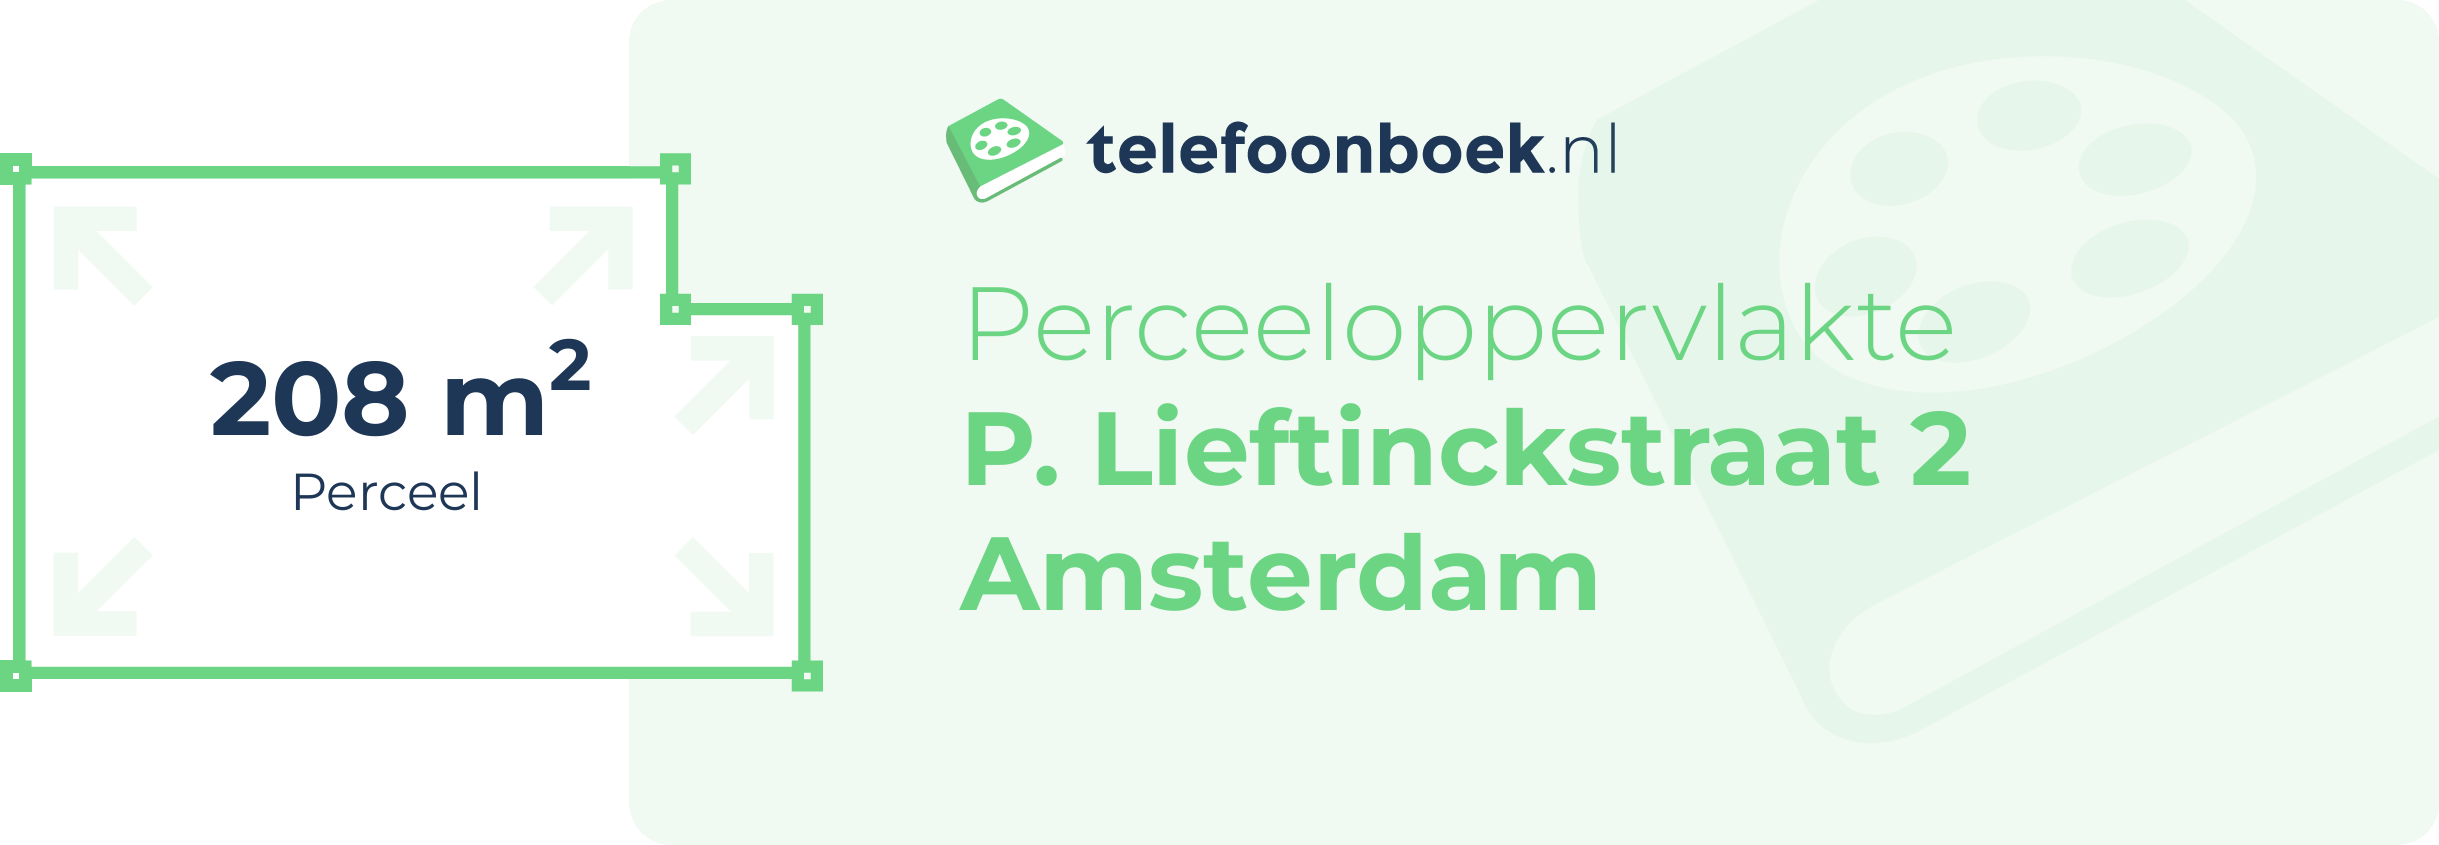 Perceeloppervlakte P. Lieftinckstraat 2 Amsterdam